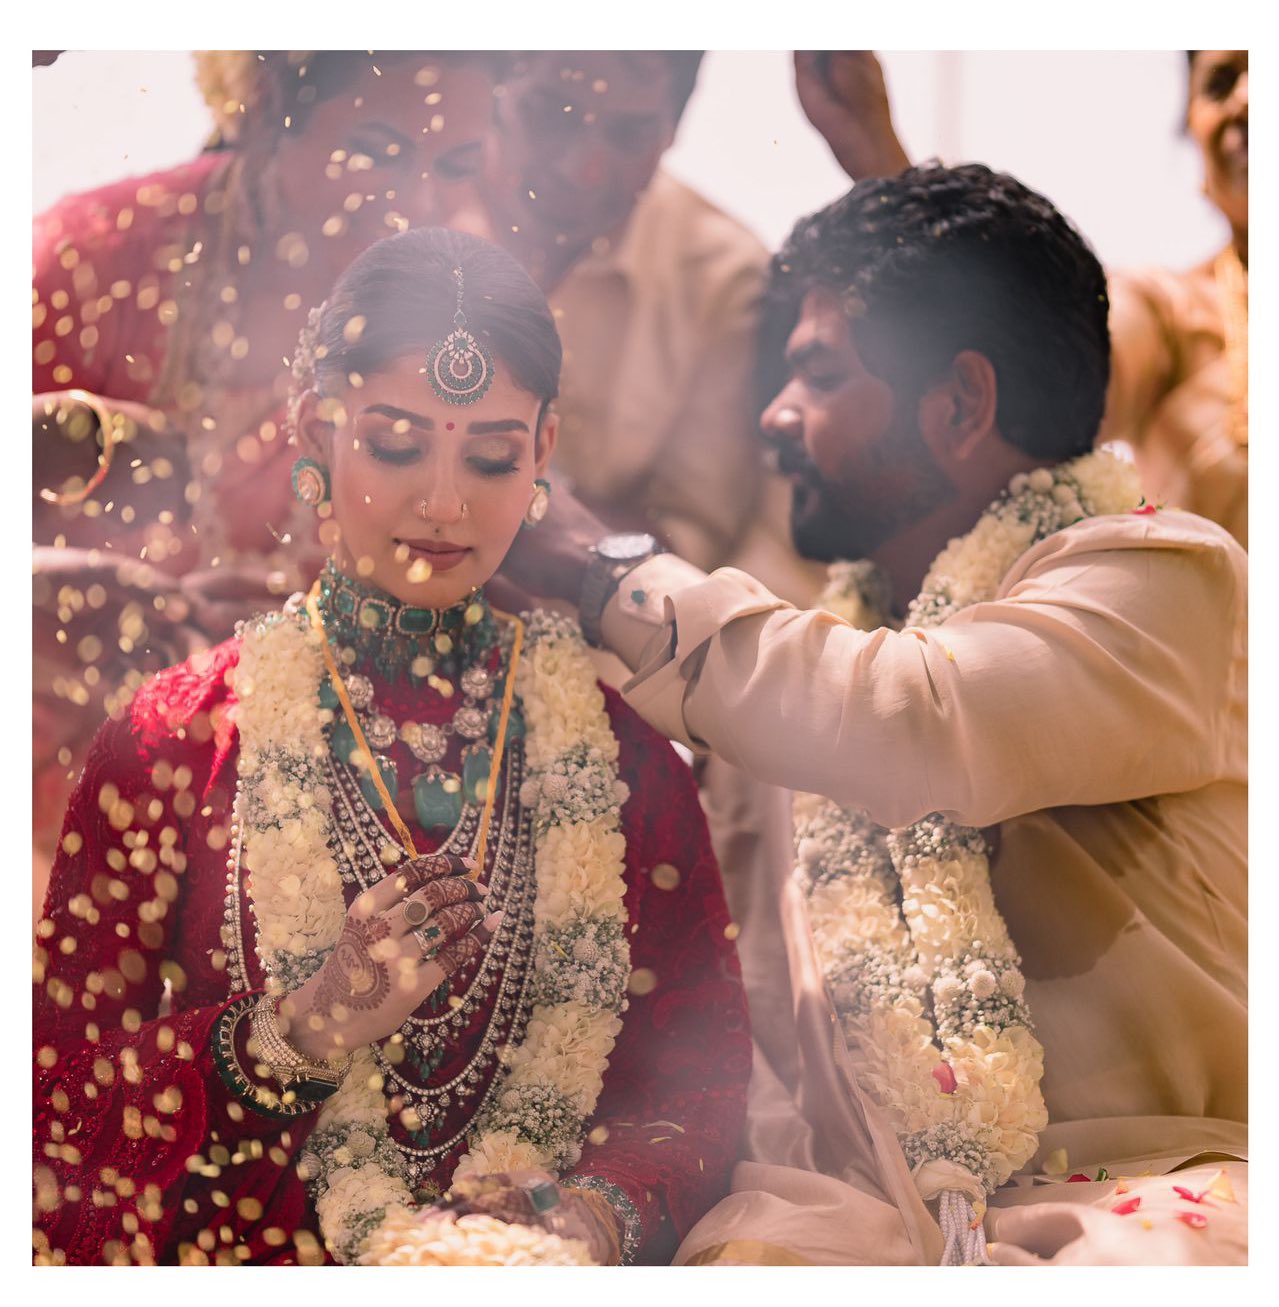 Vignesh shivan and nayanthara marriage photos and vignesh shivan tweet getting viral